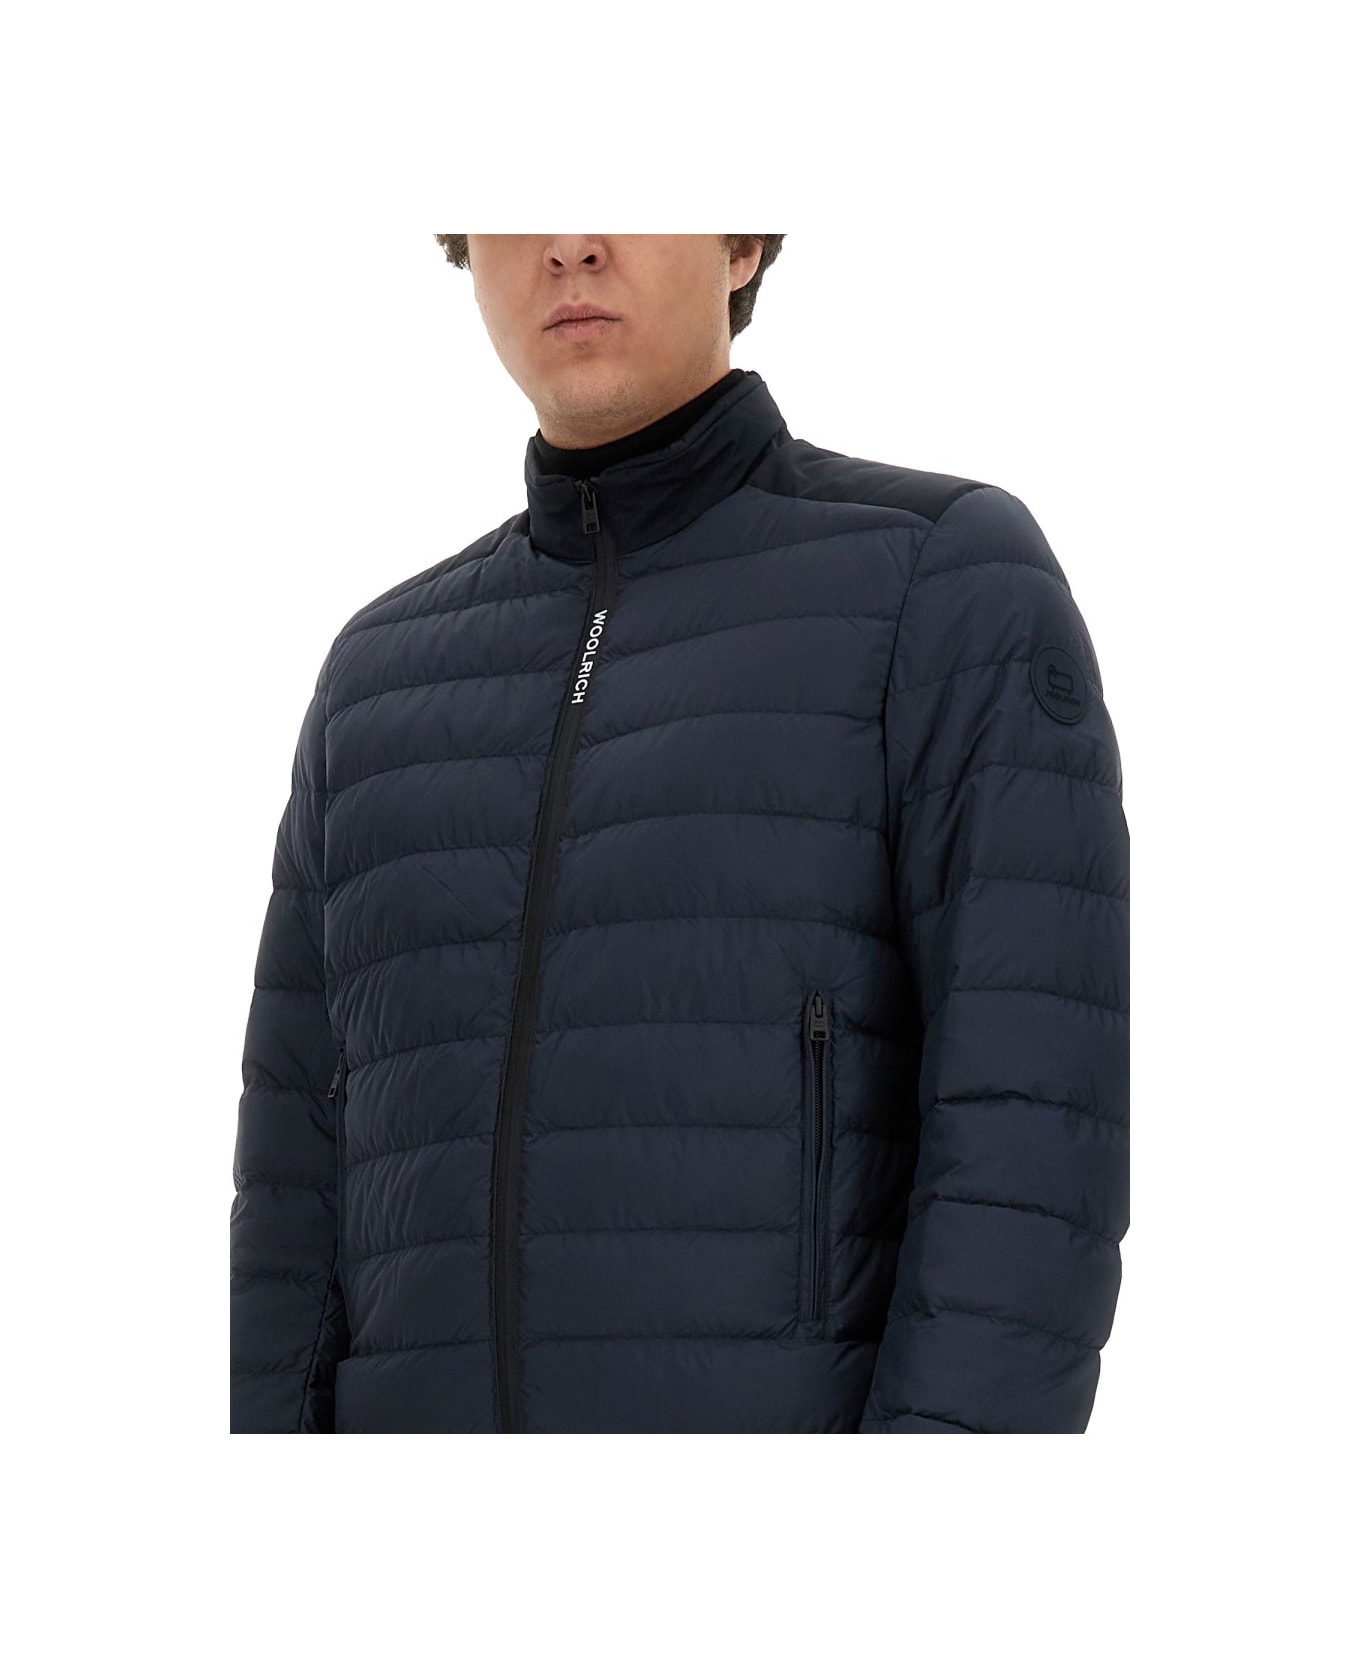 Woolrich Jacket With Logo - BLUE ダウンジャケット